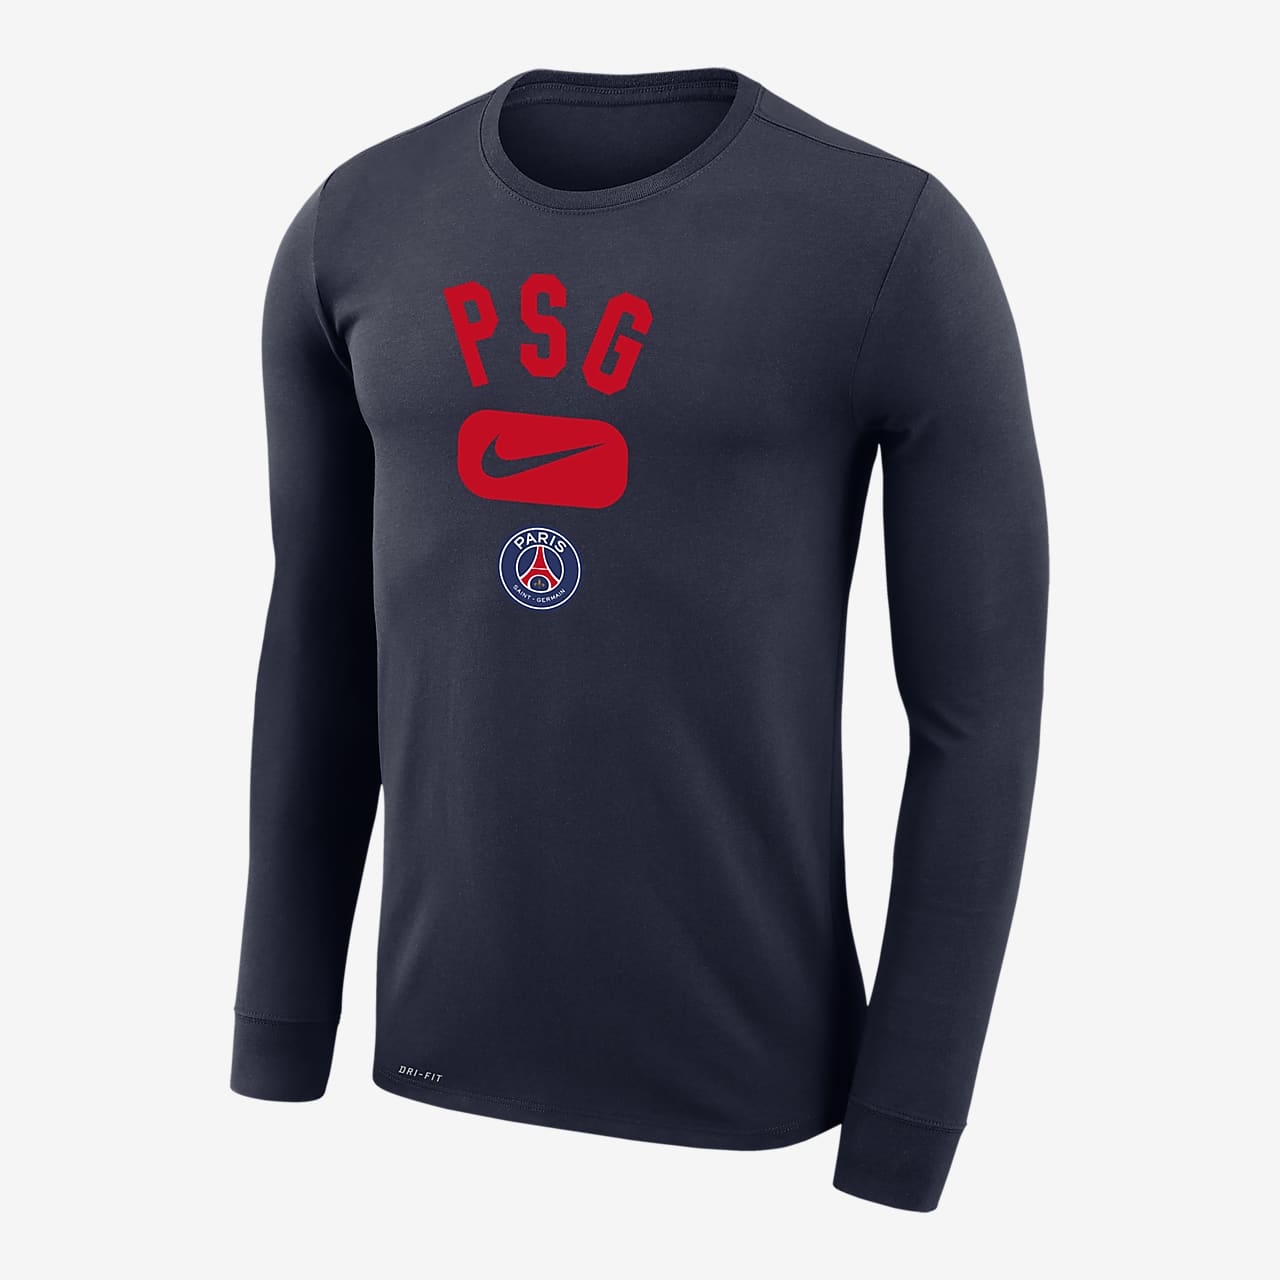 Saint-Germain Legend Men's Nike Dri-FIT Long-Sleeve